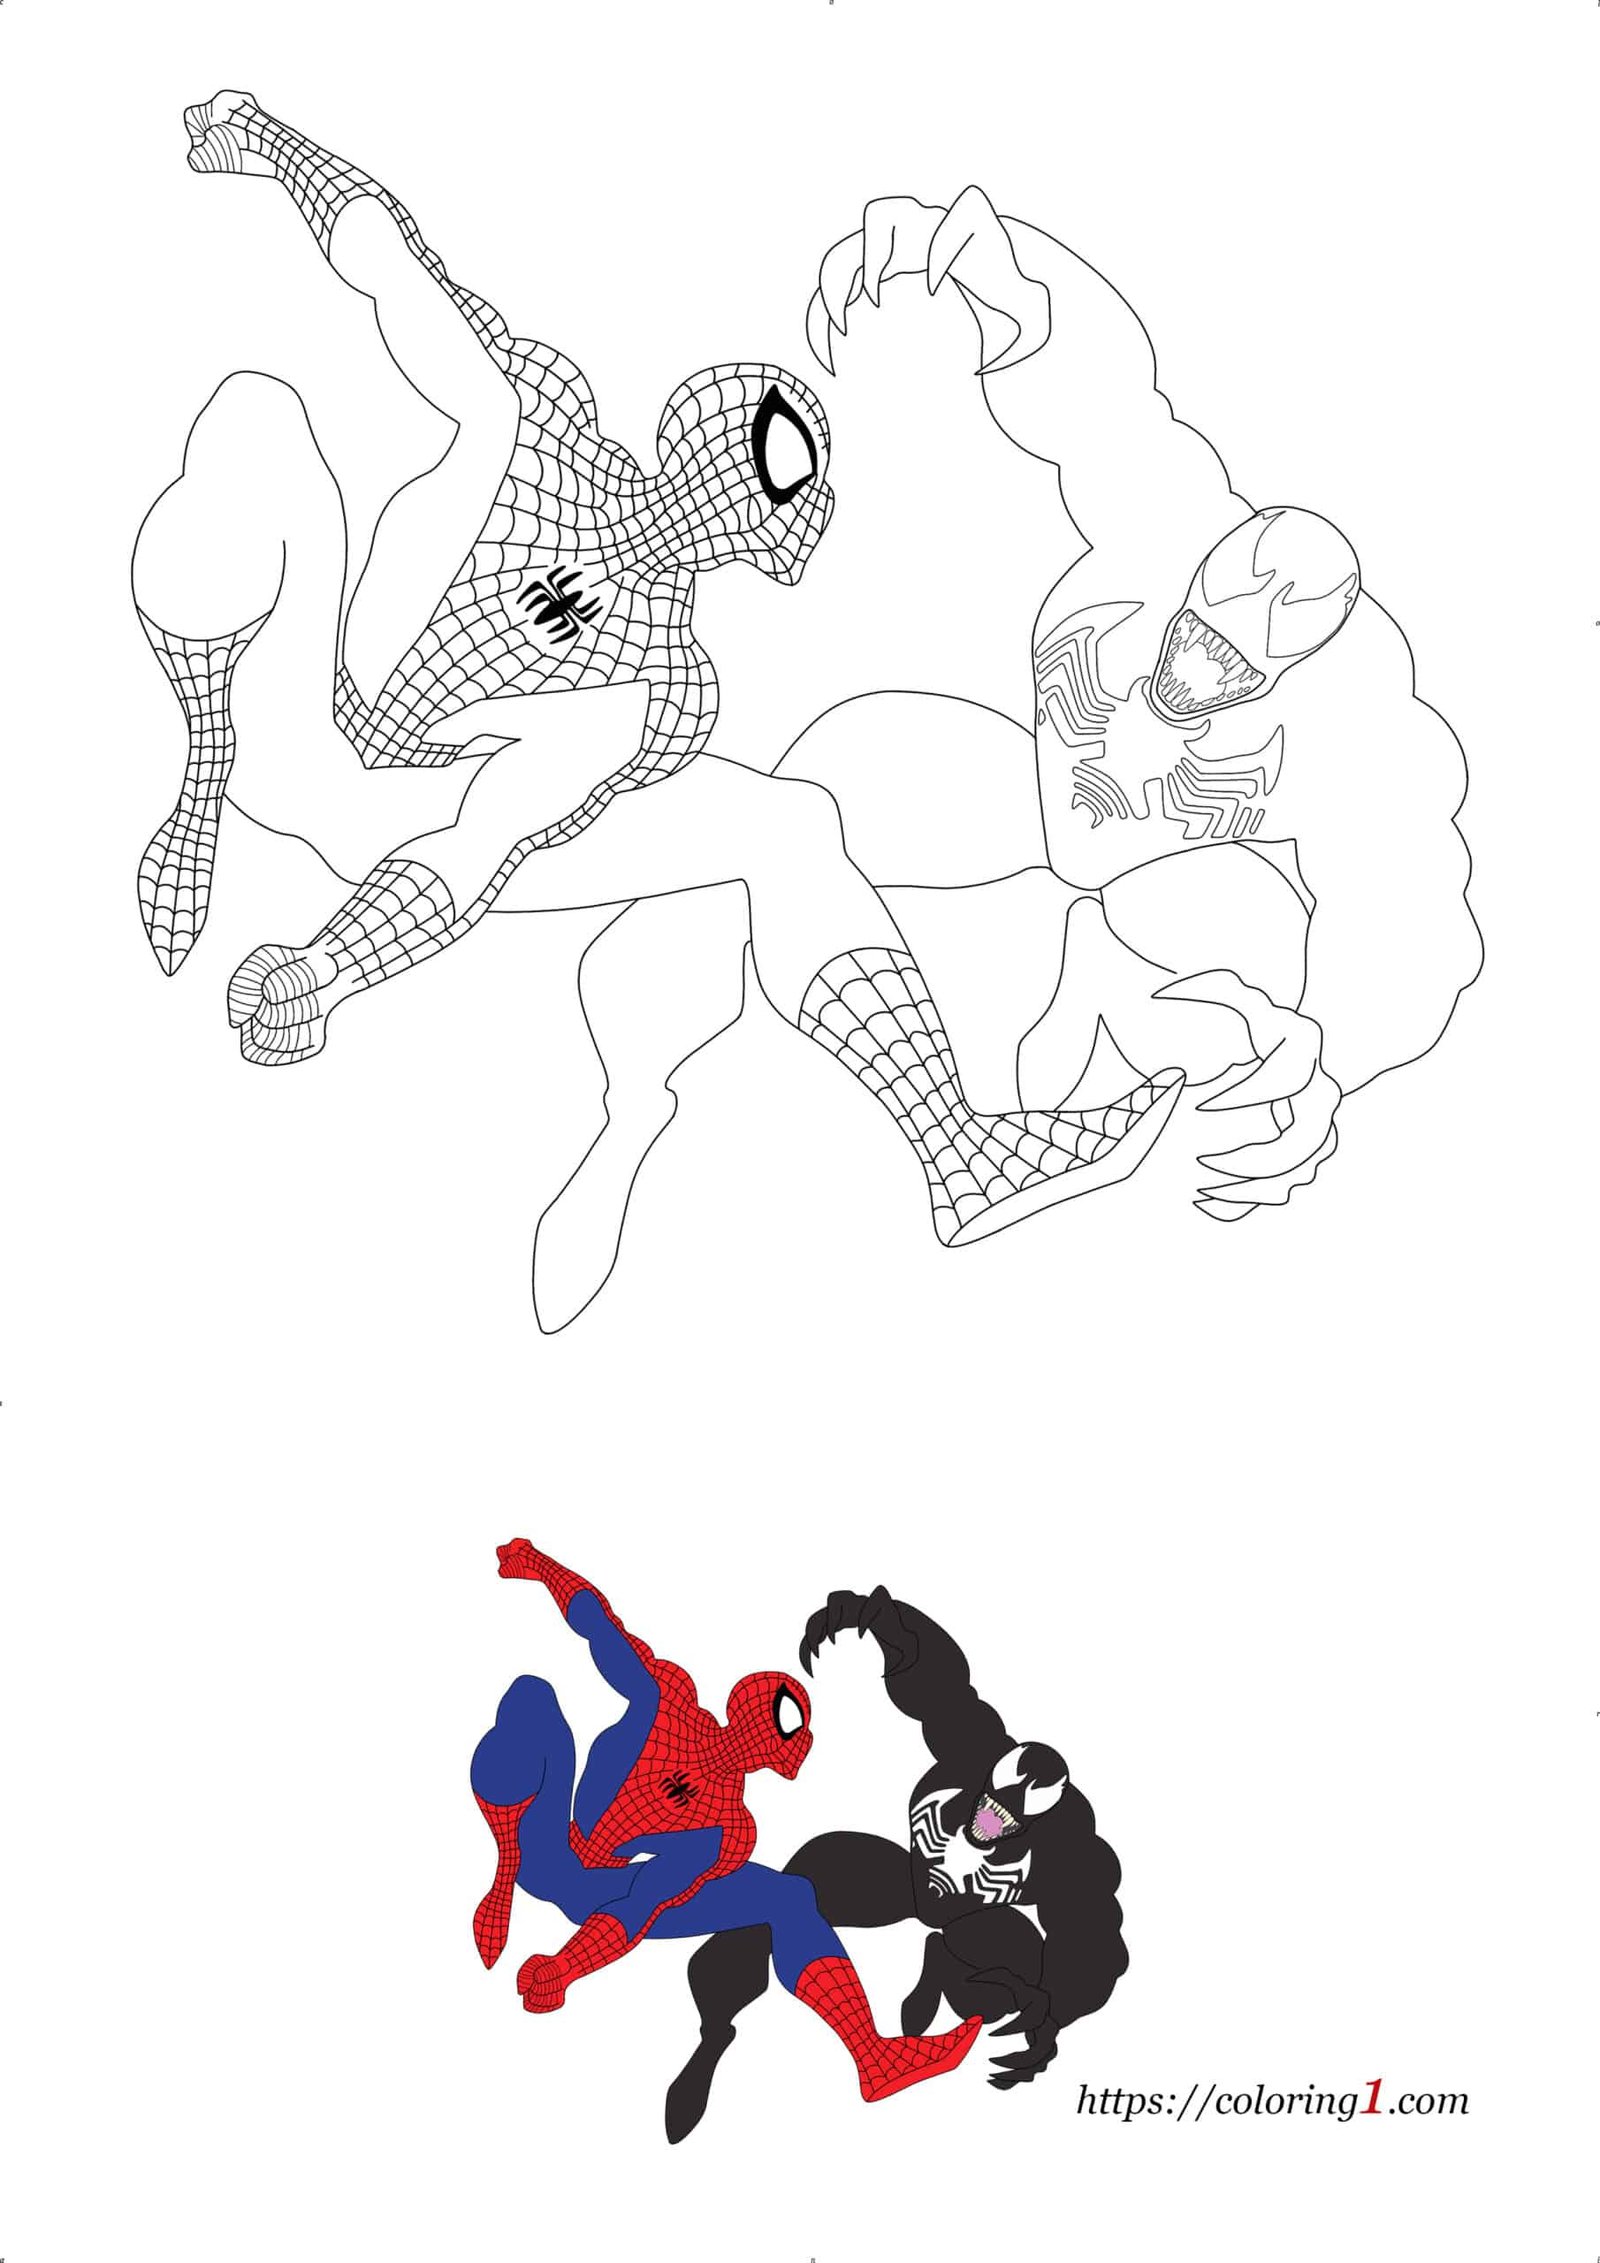 Venom vs spiderman coloring pages